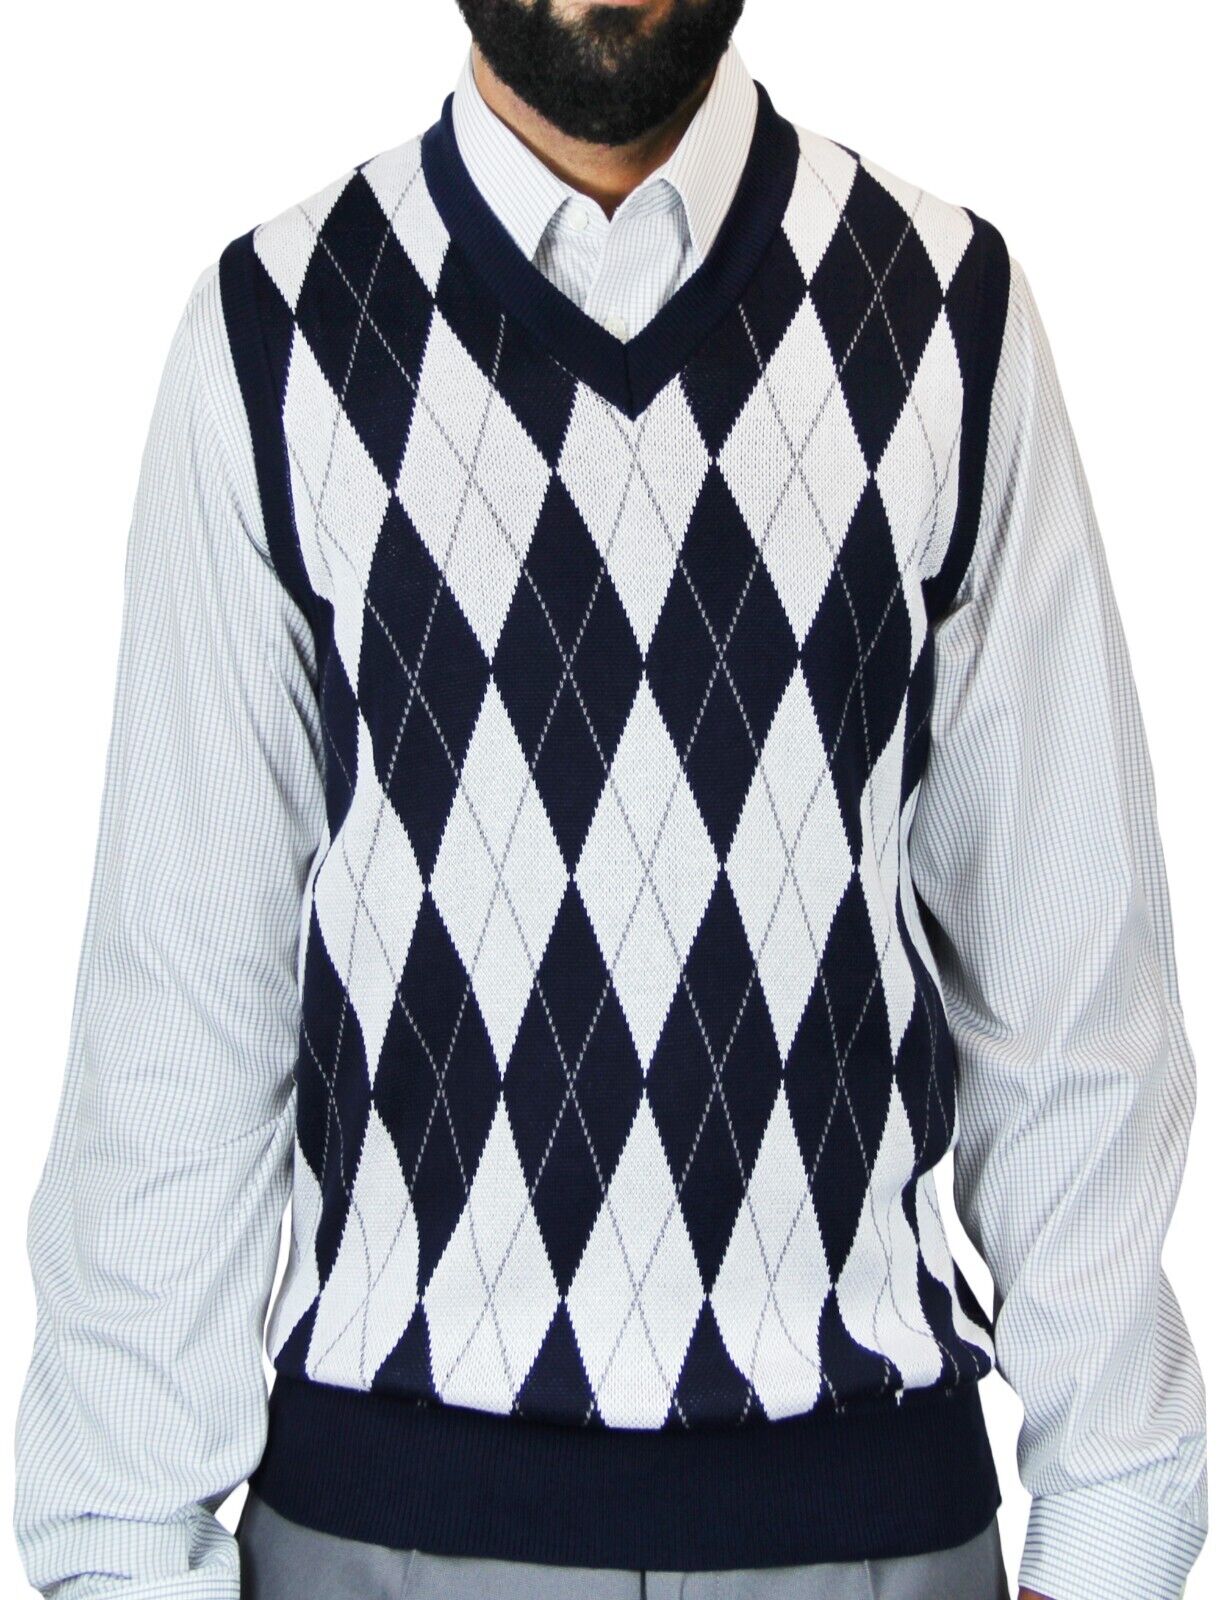 Blue Ocean Mens Big & Tall Jacquard Sweater Vest (sv-245bm)